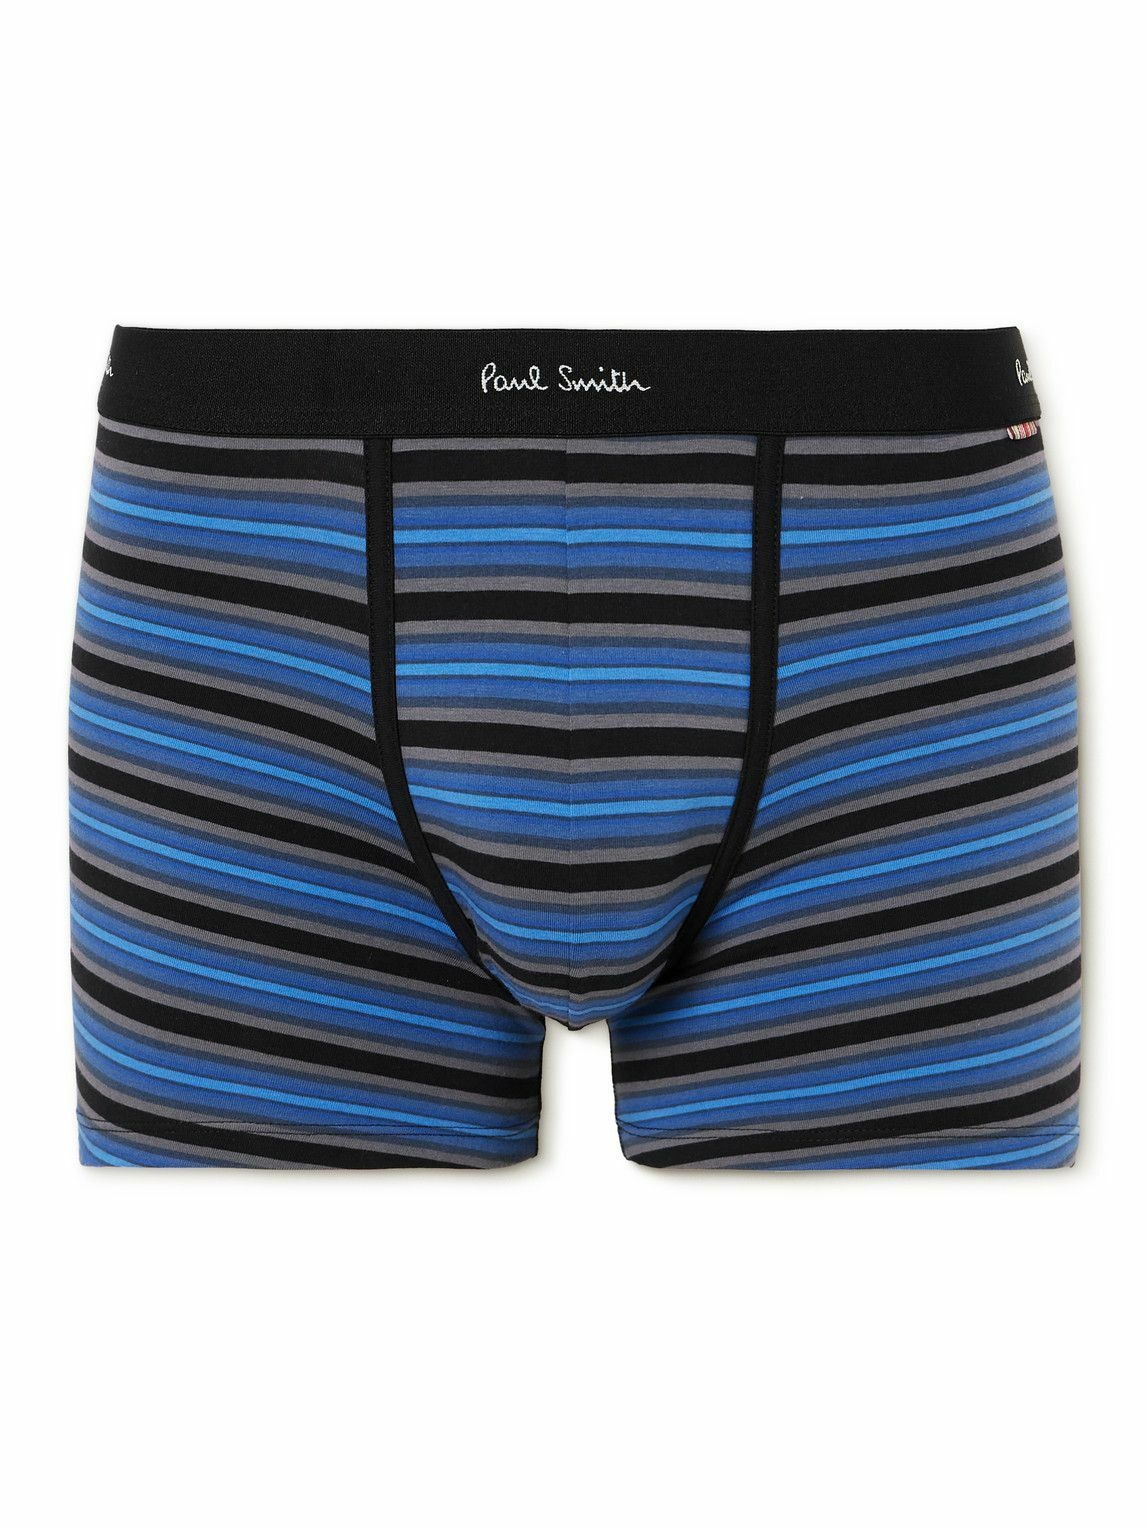 Paul Smith - Long-Length Striped Stretch-Cotton Boxer Briefs - Blue ...